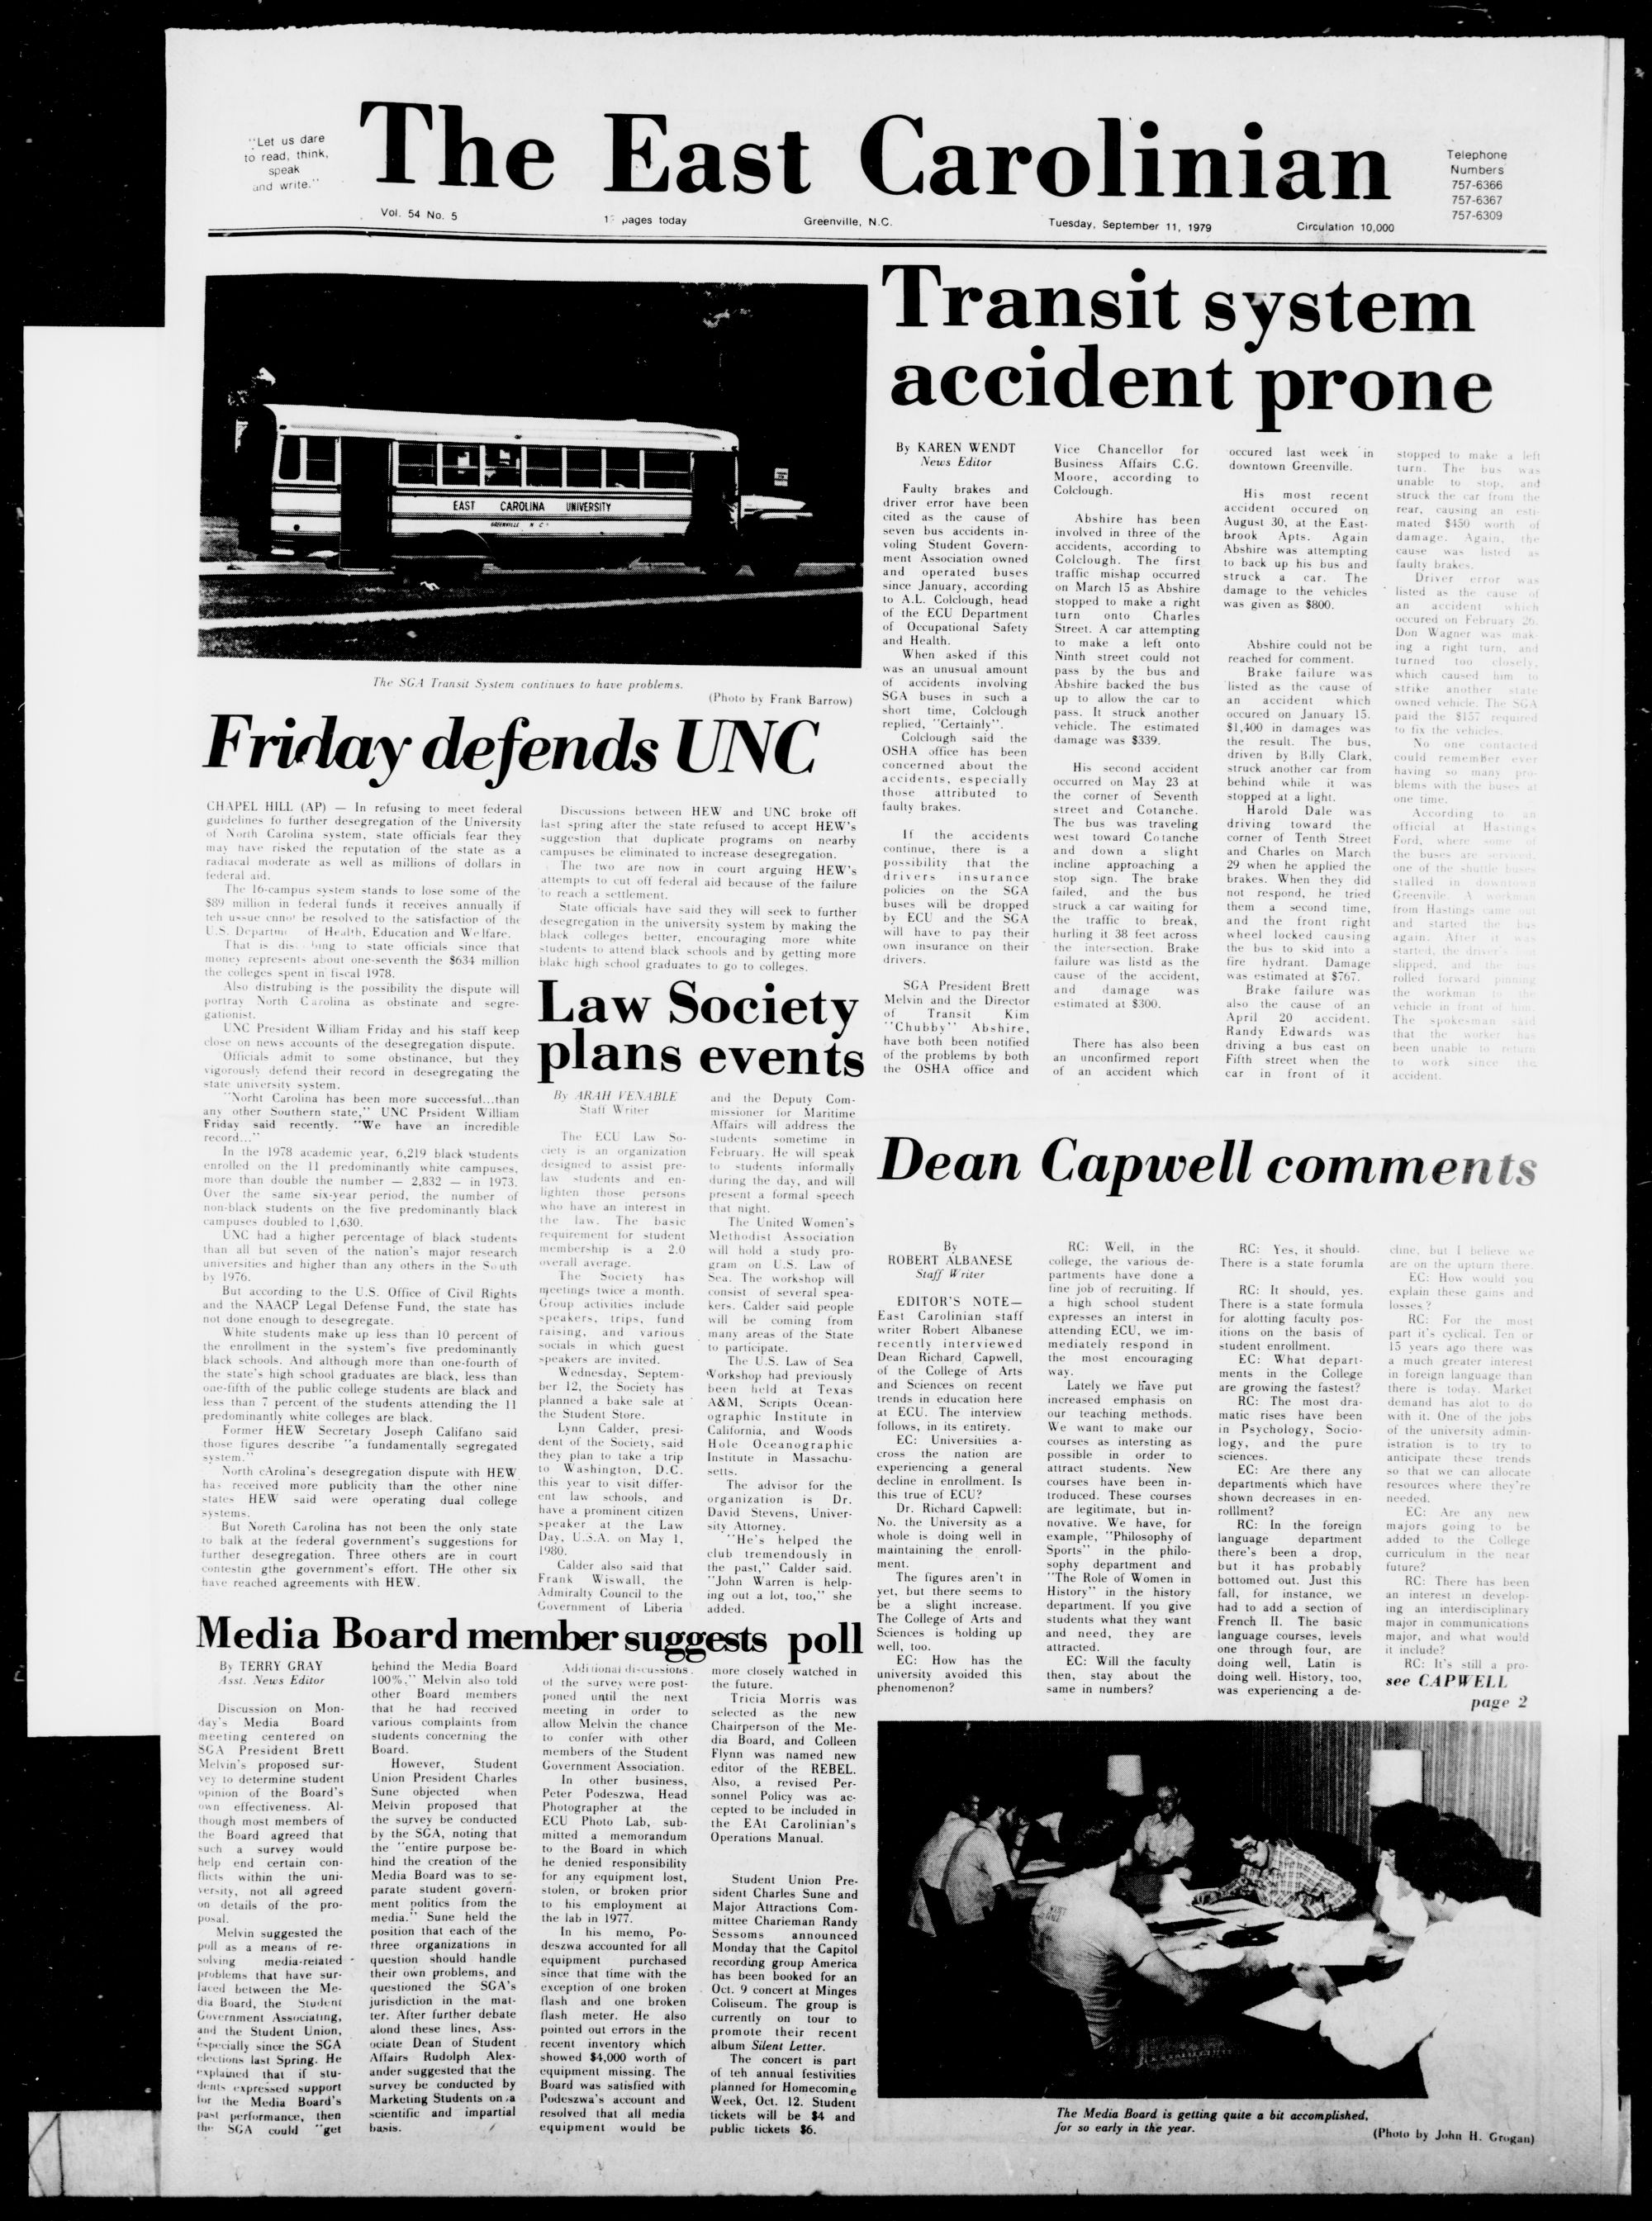 The East Carolinian, September 11, 1979